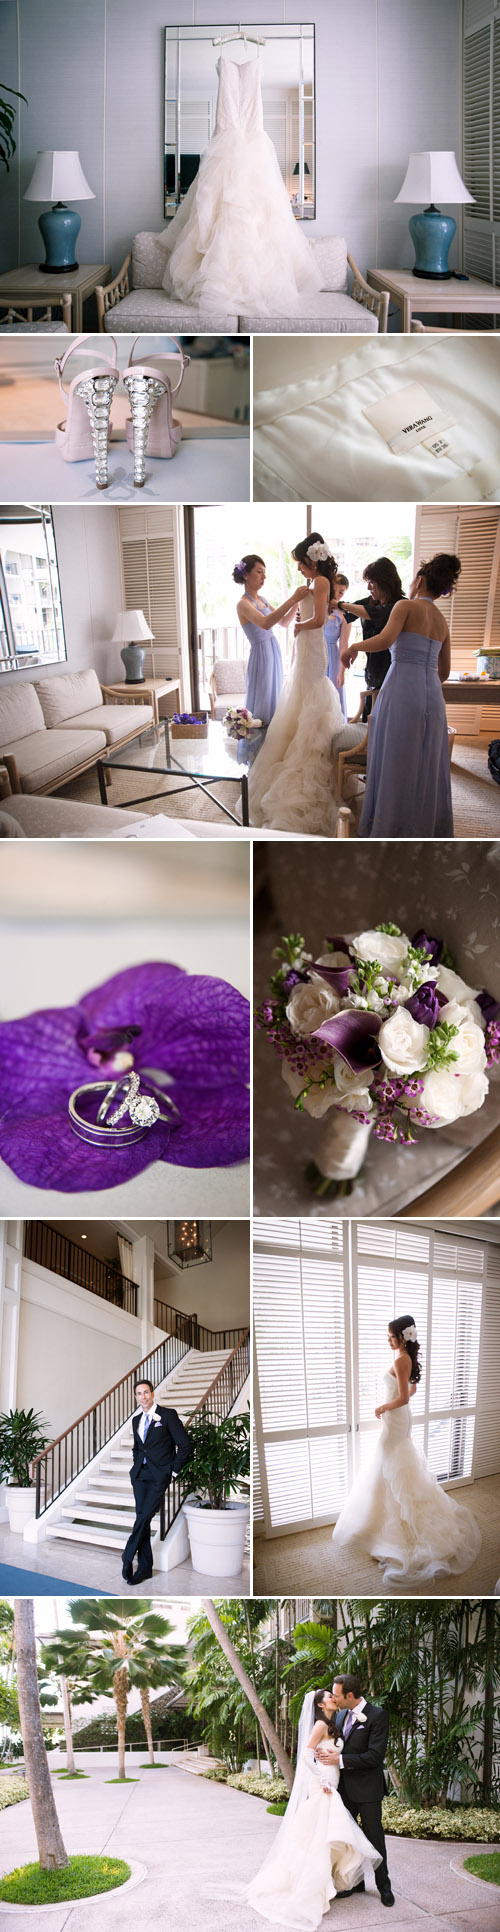 purple, lavender and white hawaii wedding at Halekulani Hotel, Honolulu, photos by Derek Wong